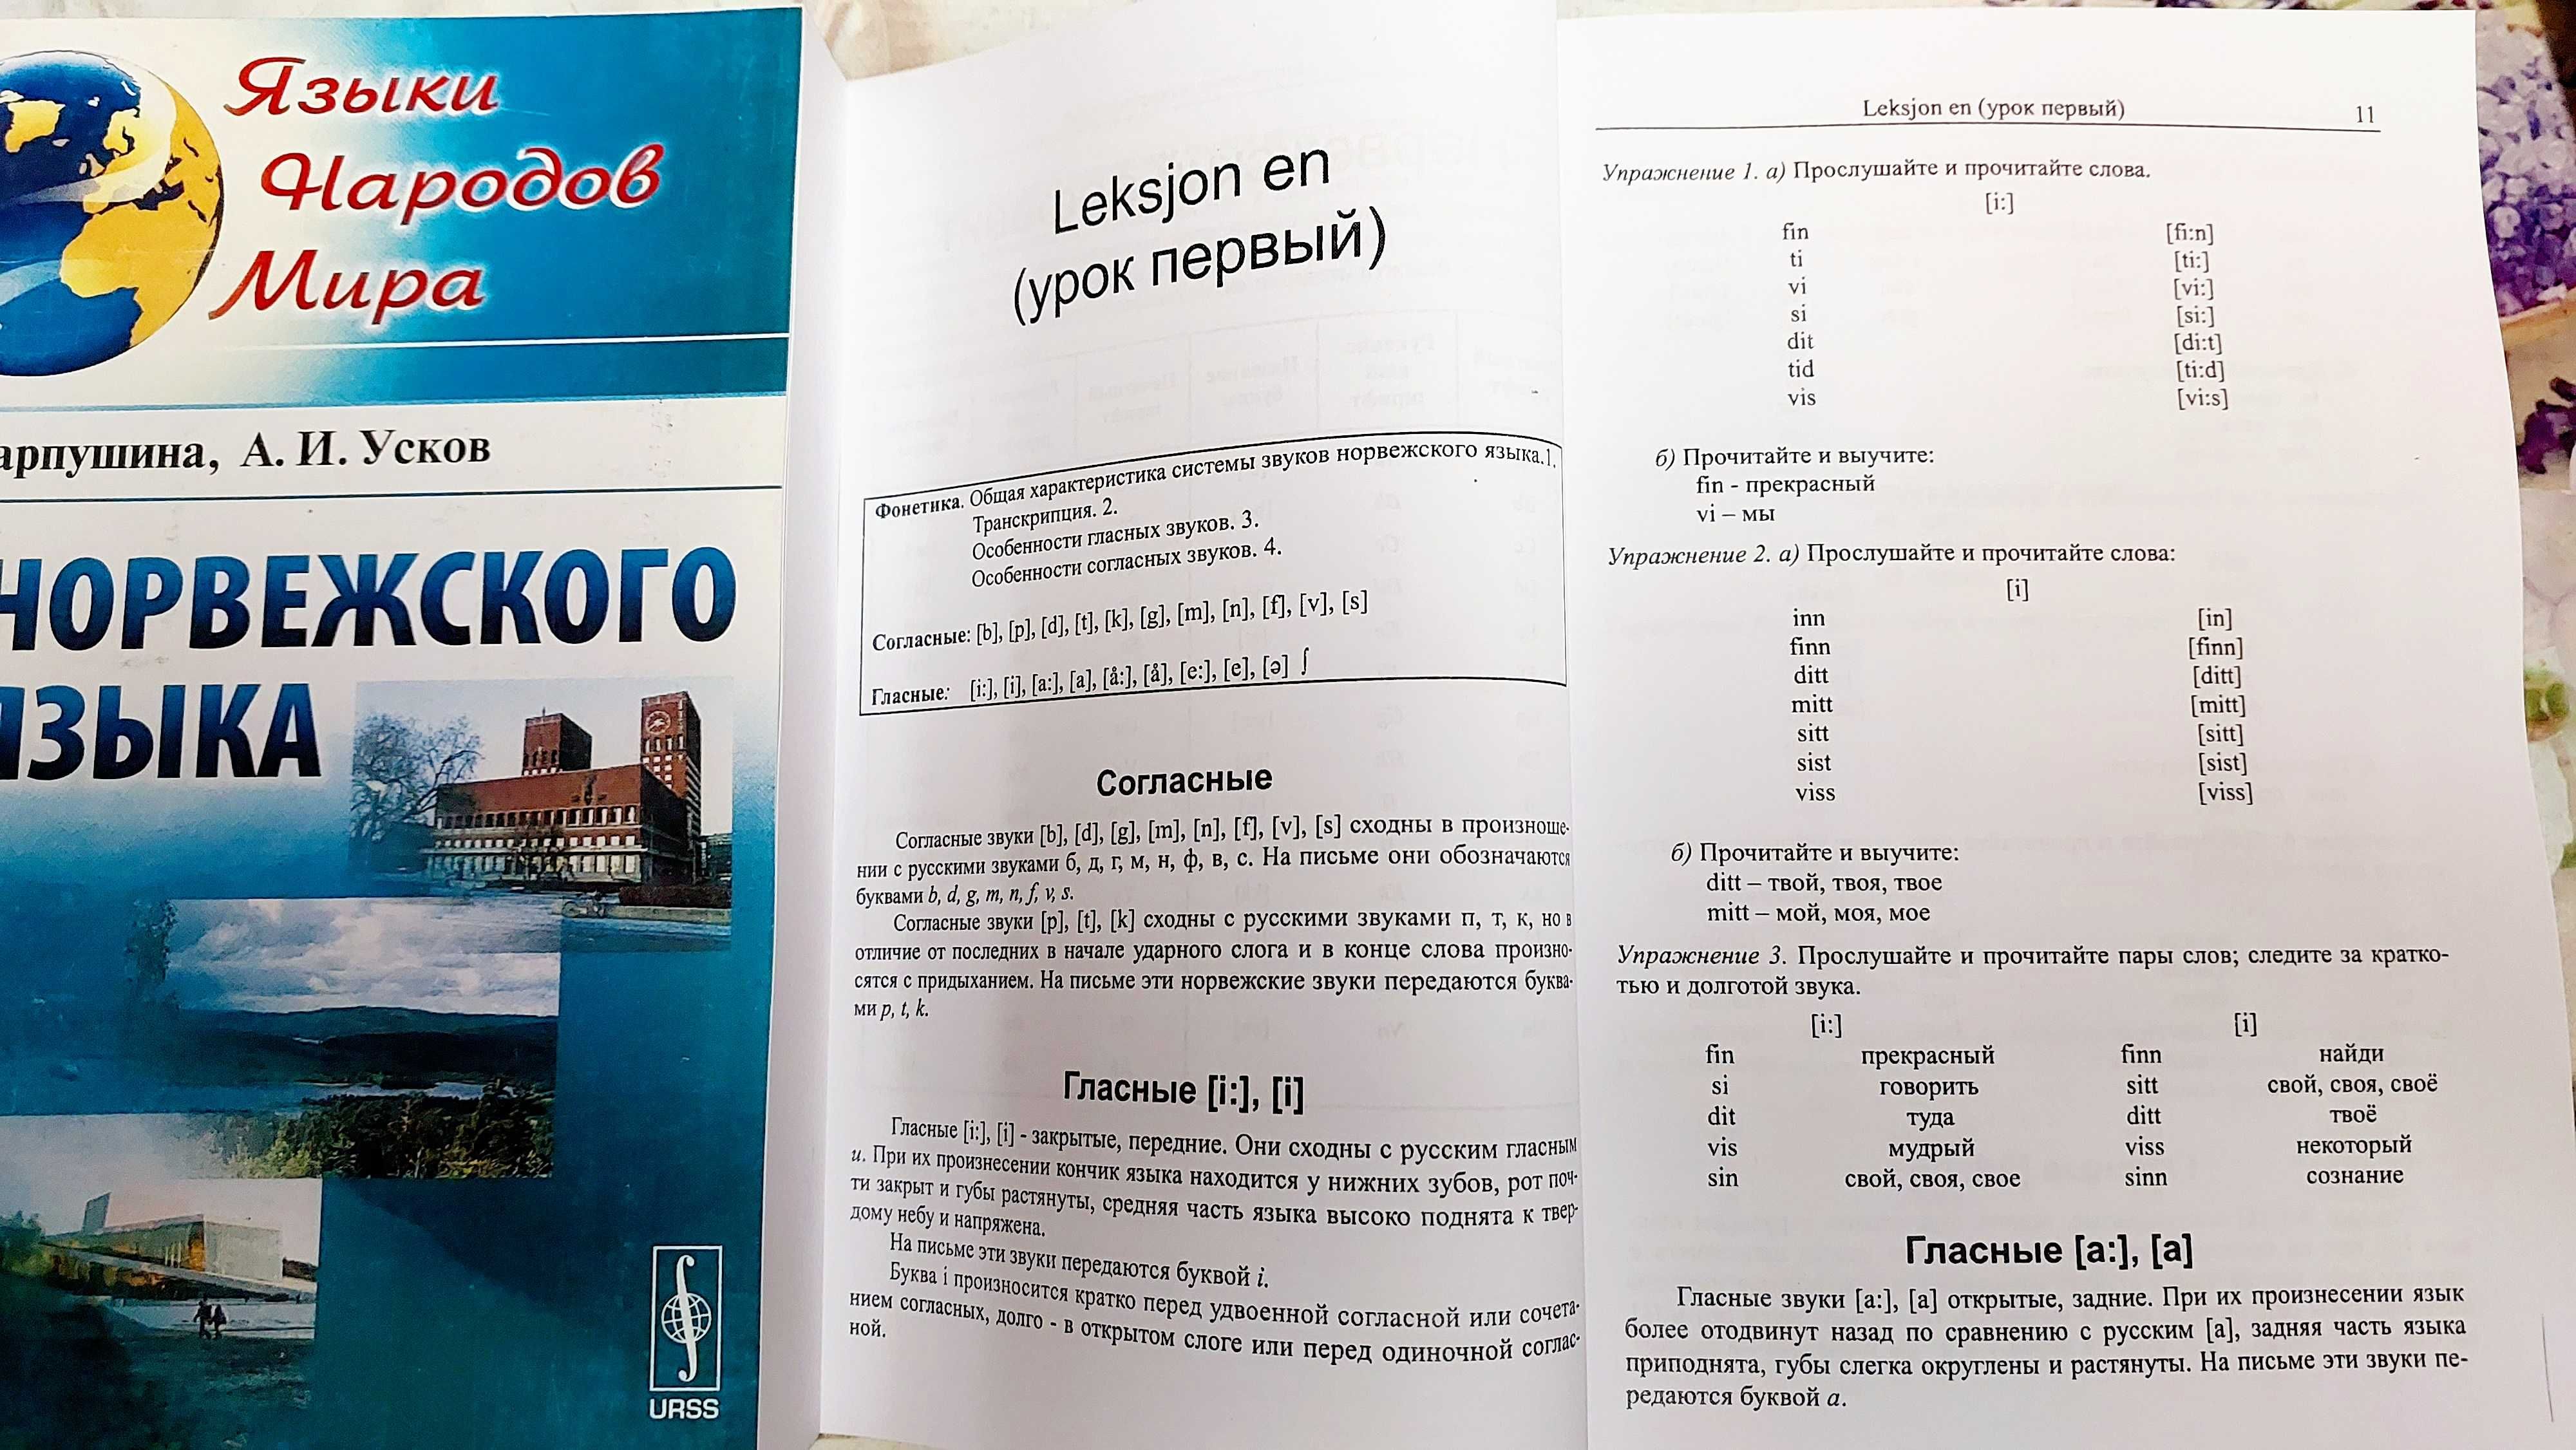 Норвежский язык учебник грамматика лексика упражнения Карпушина